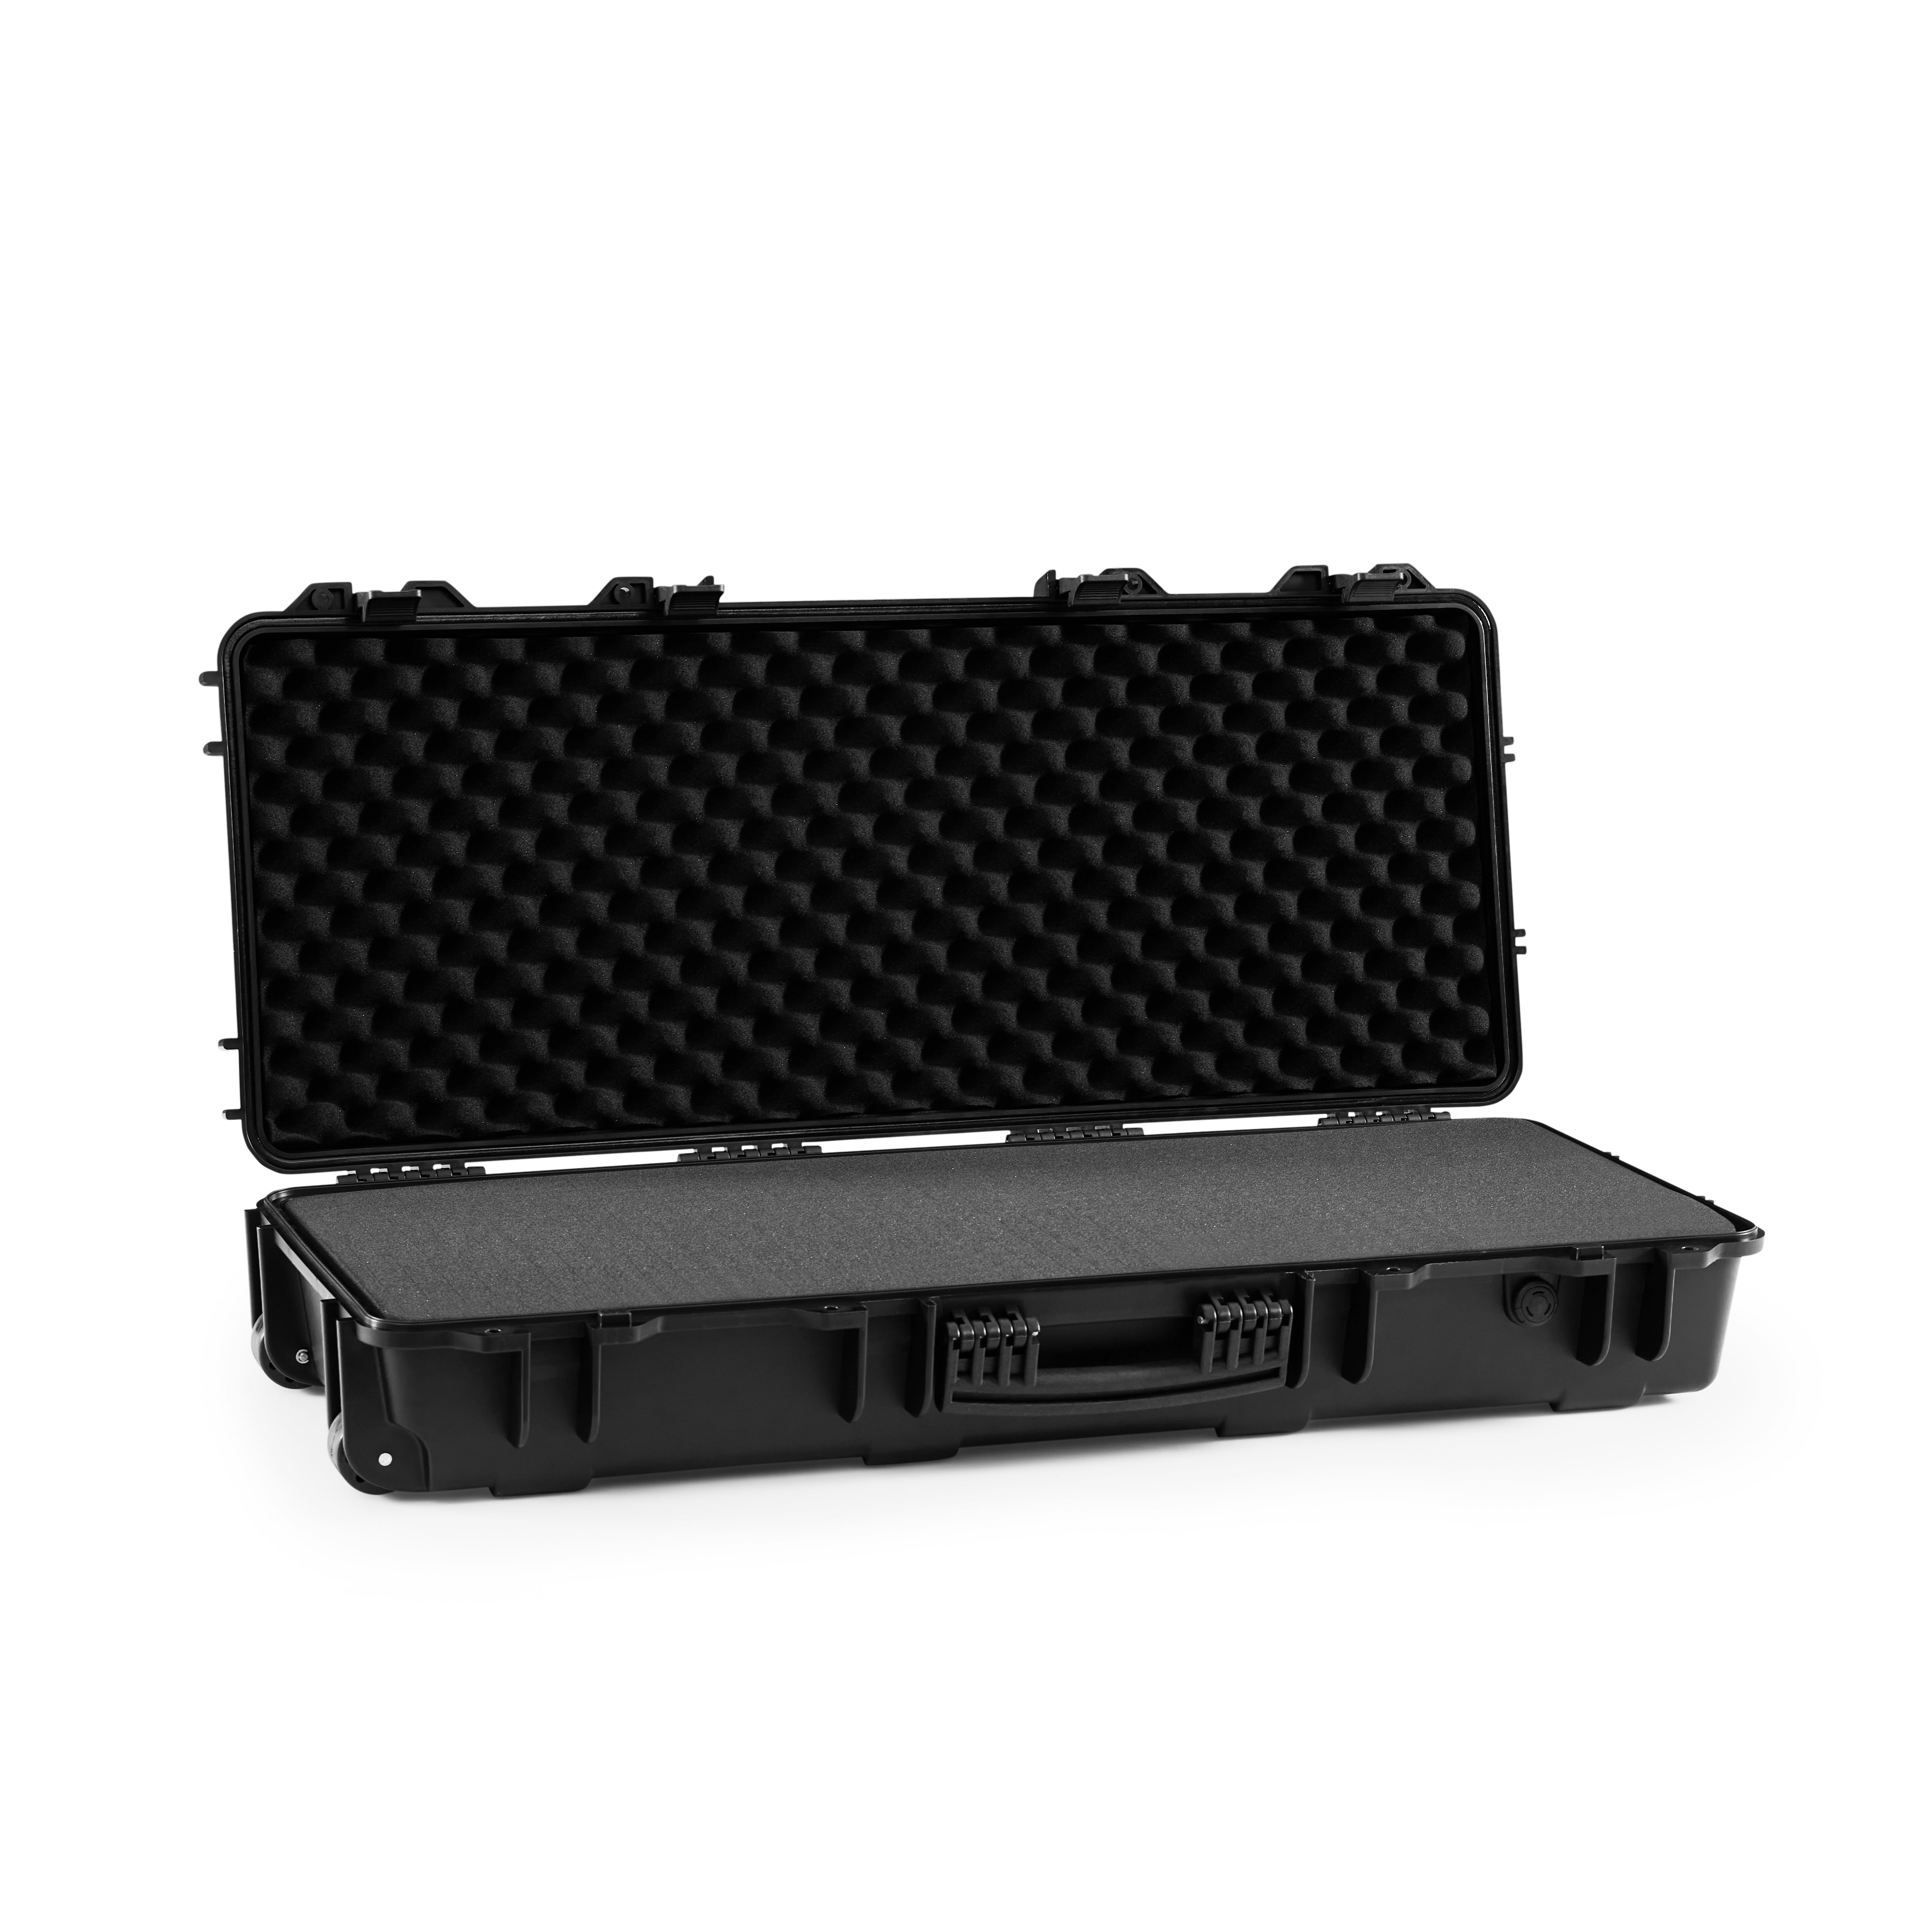 BluBox Waterproof Medium Carry Case 159